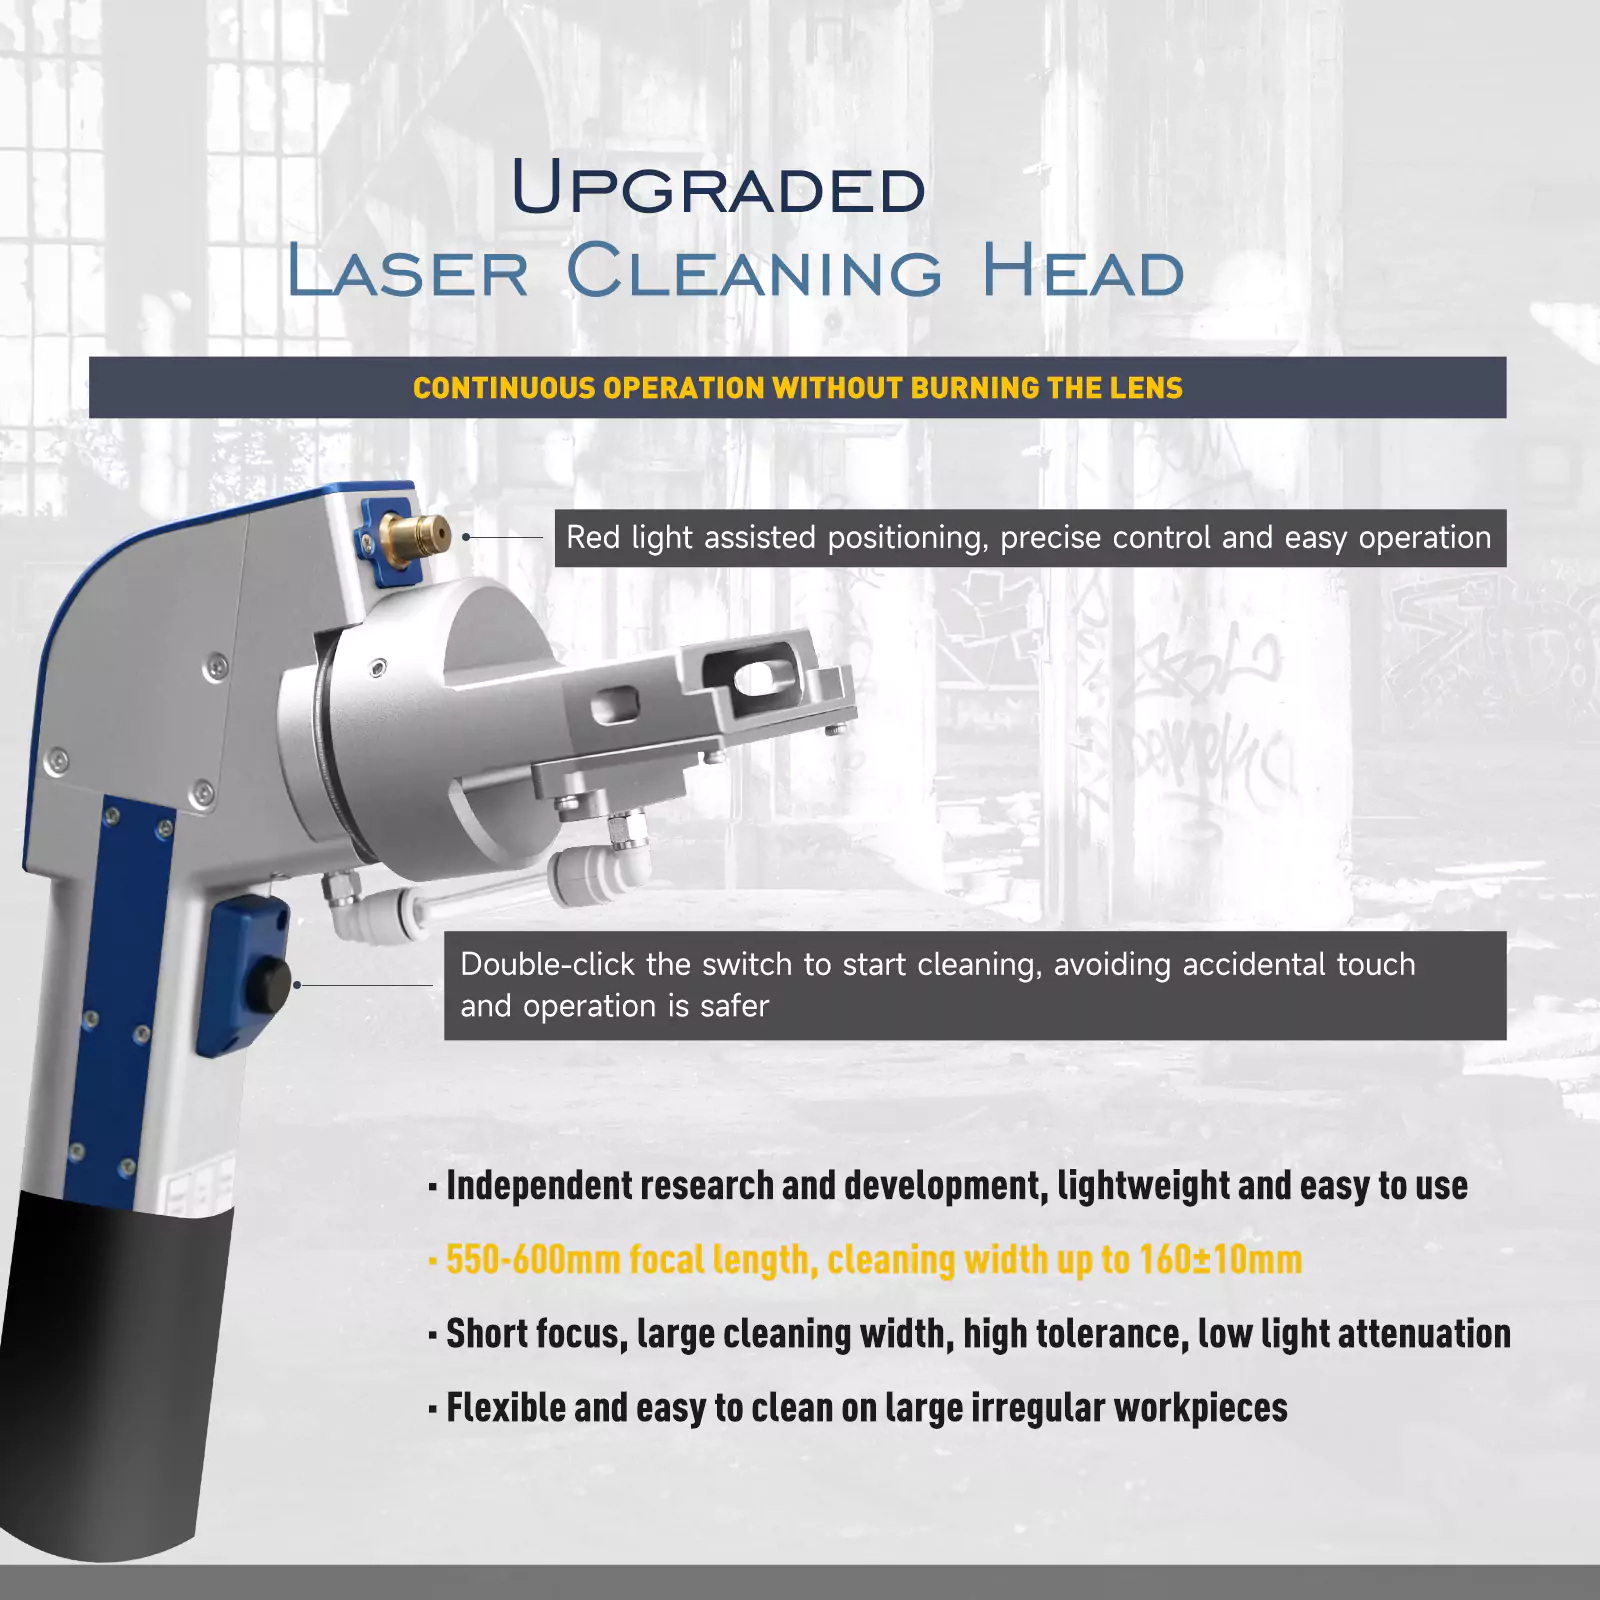 SFX 1000W Laser Cleaning Machine & Smoke Purifier Bundle Sale for